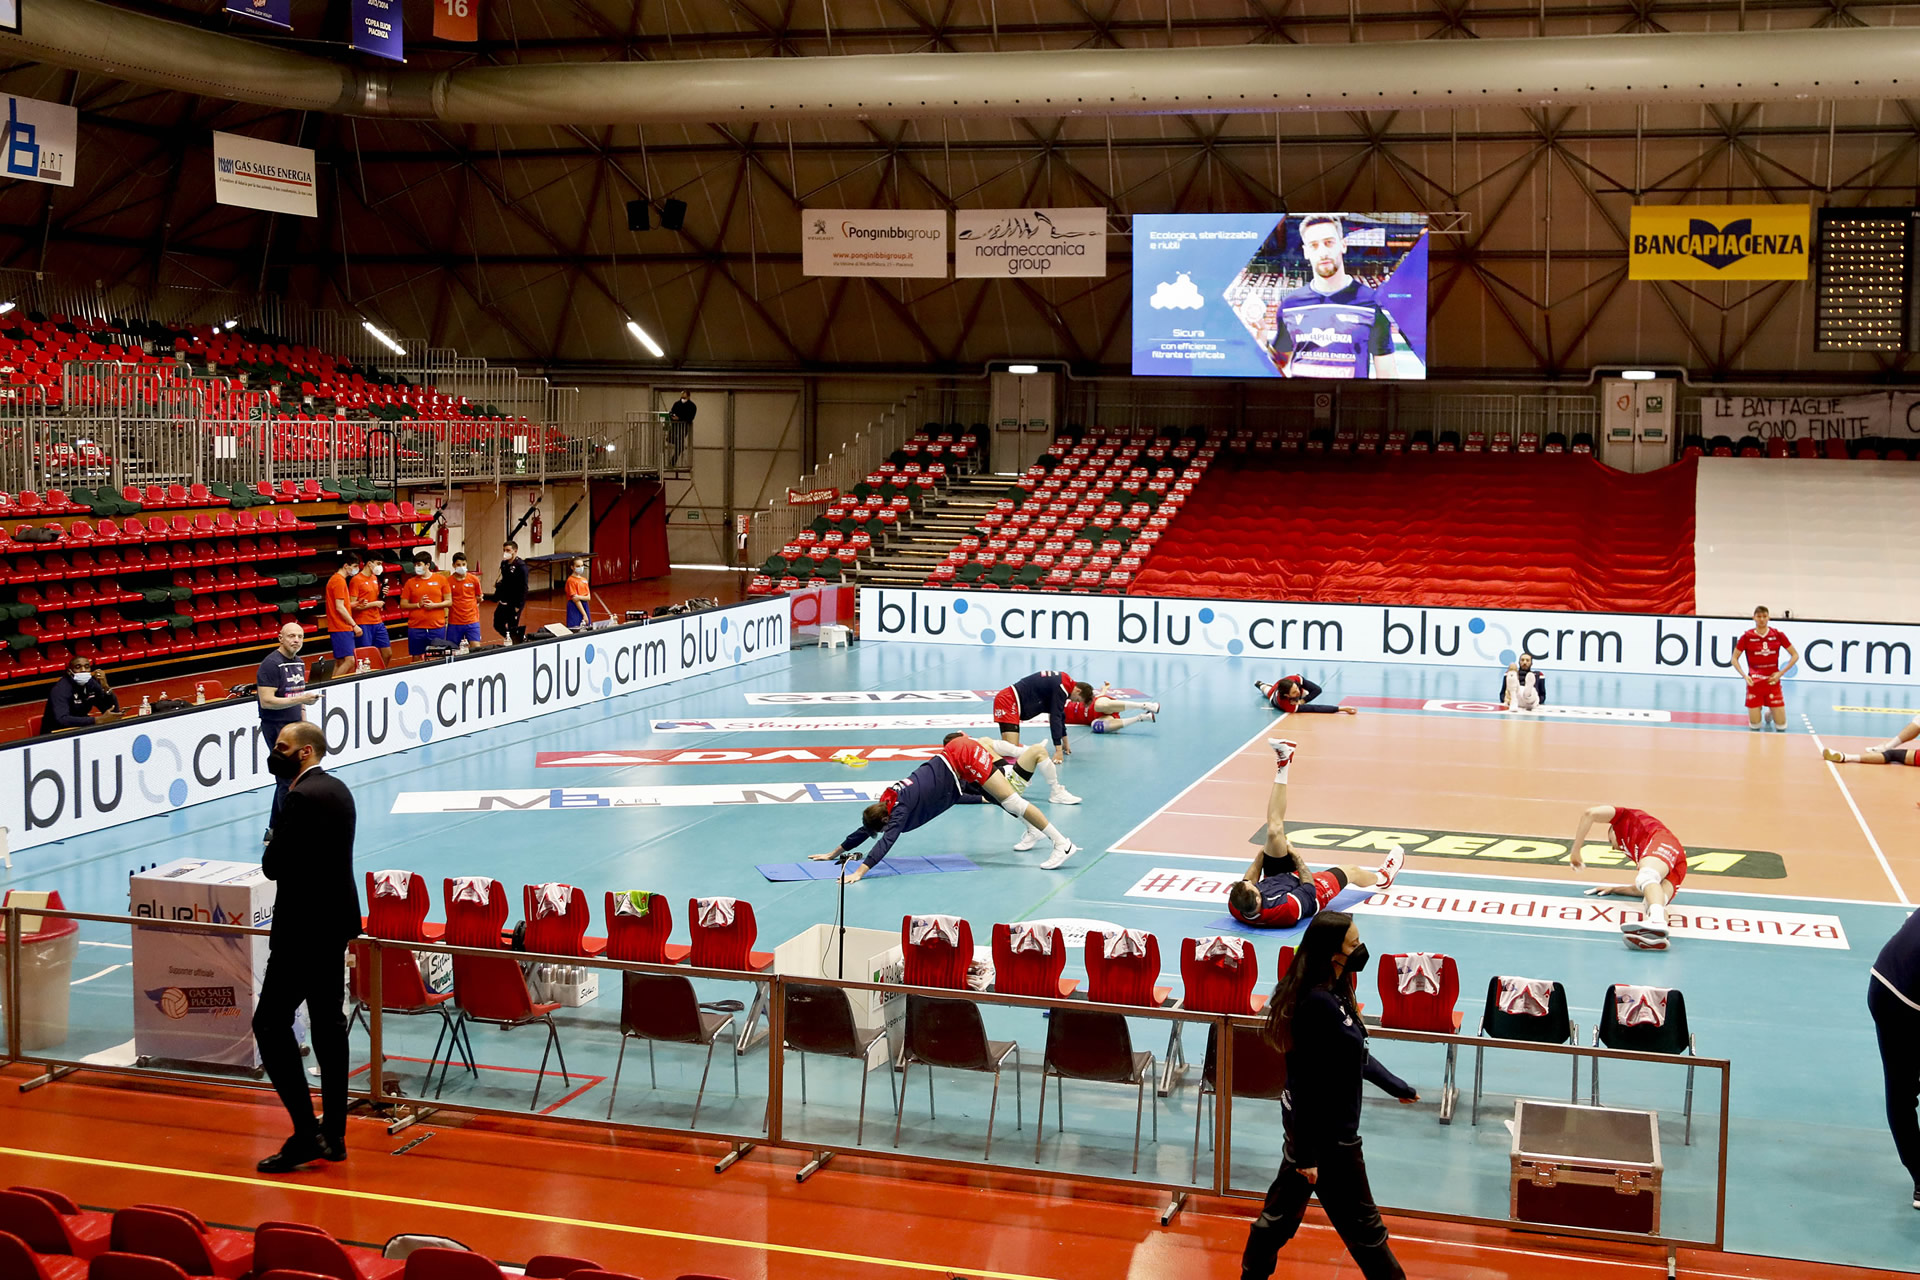 BluCRM: Sponsorizzazione Volley 2020